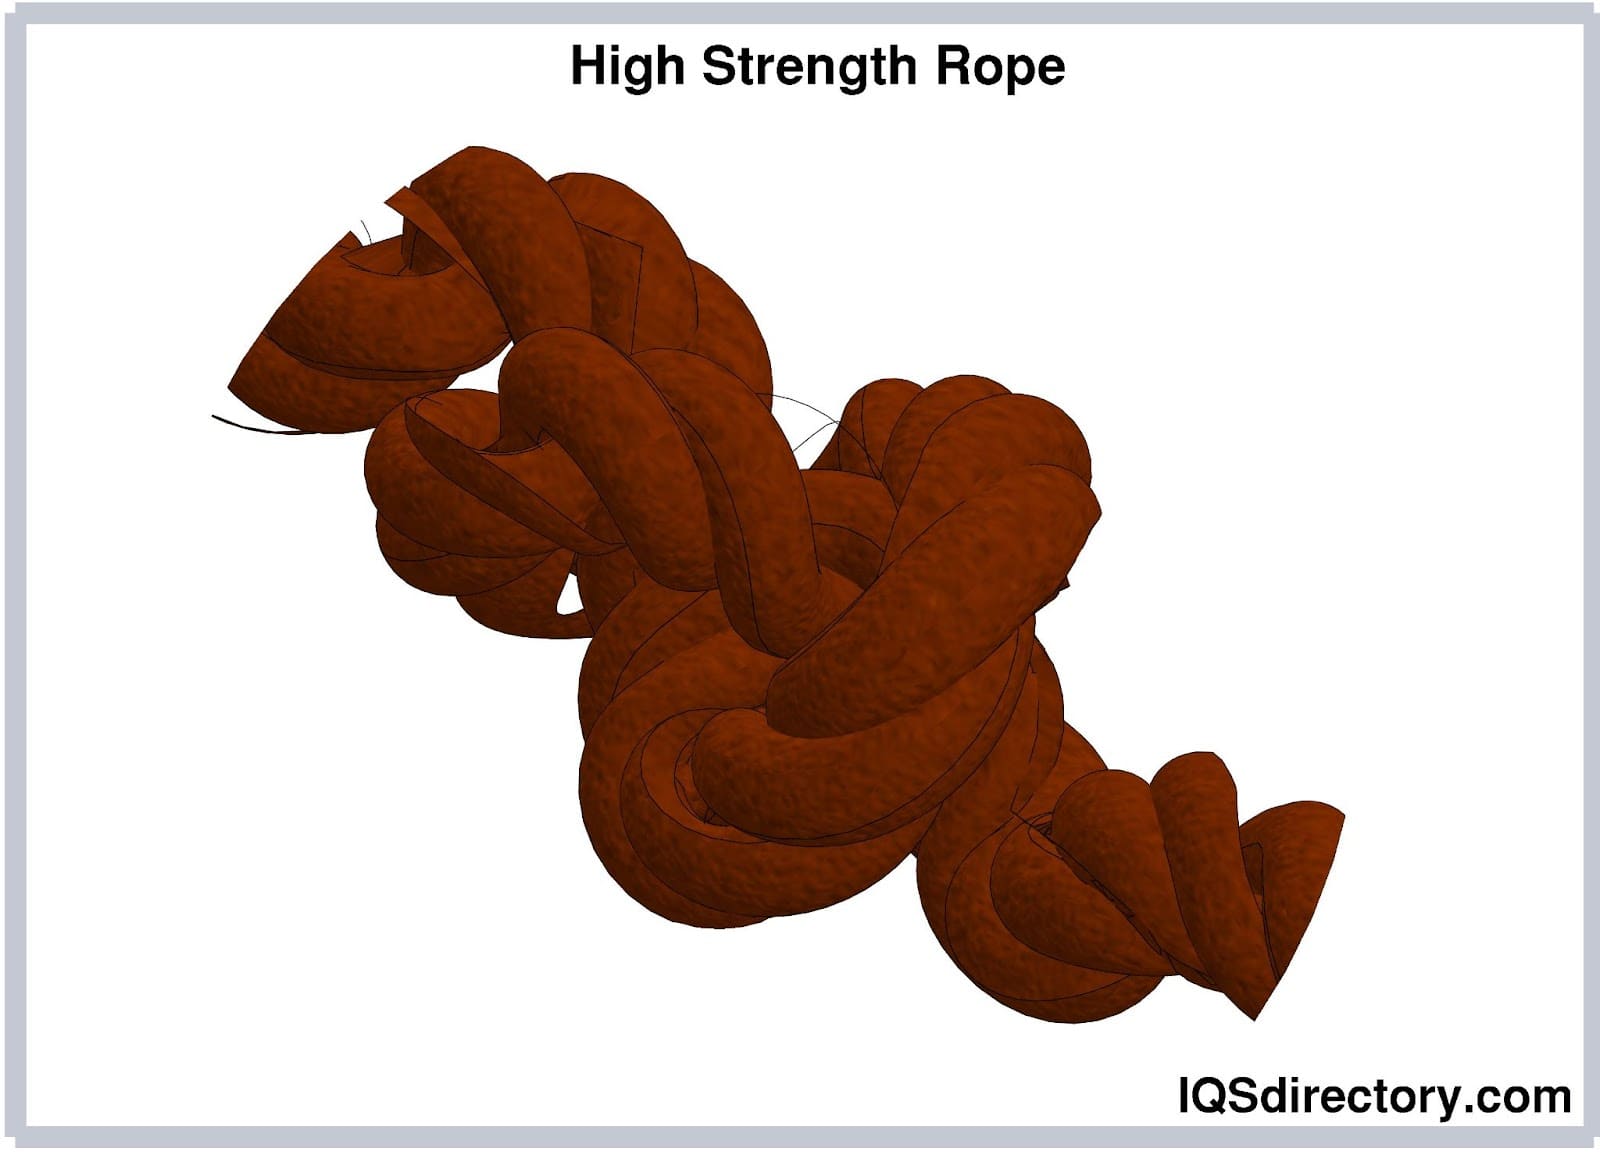 High Strength Ropes